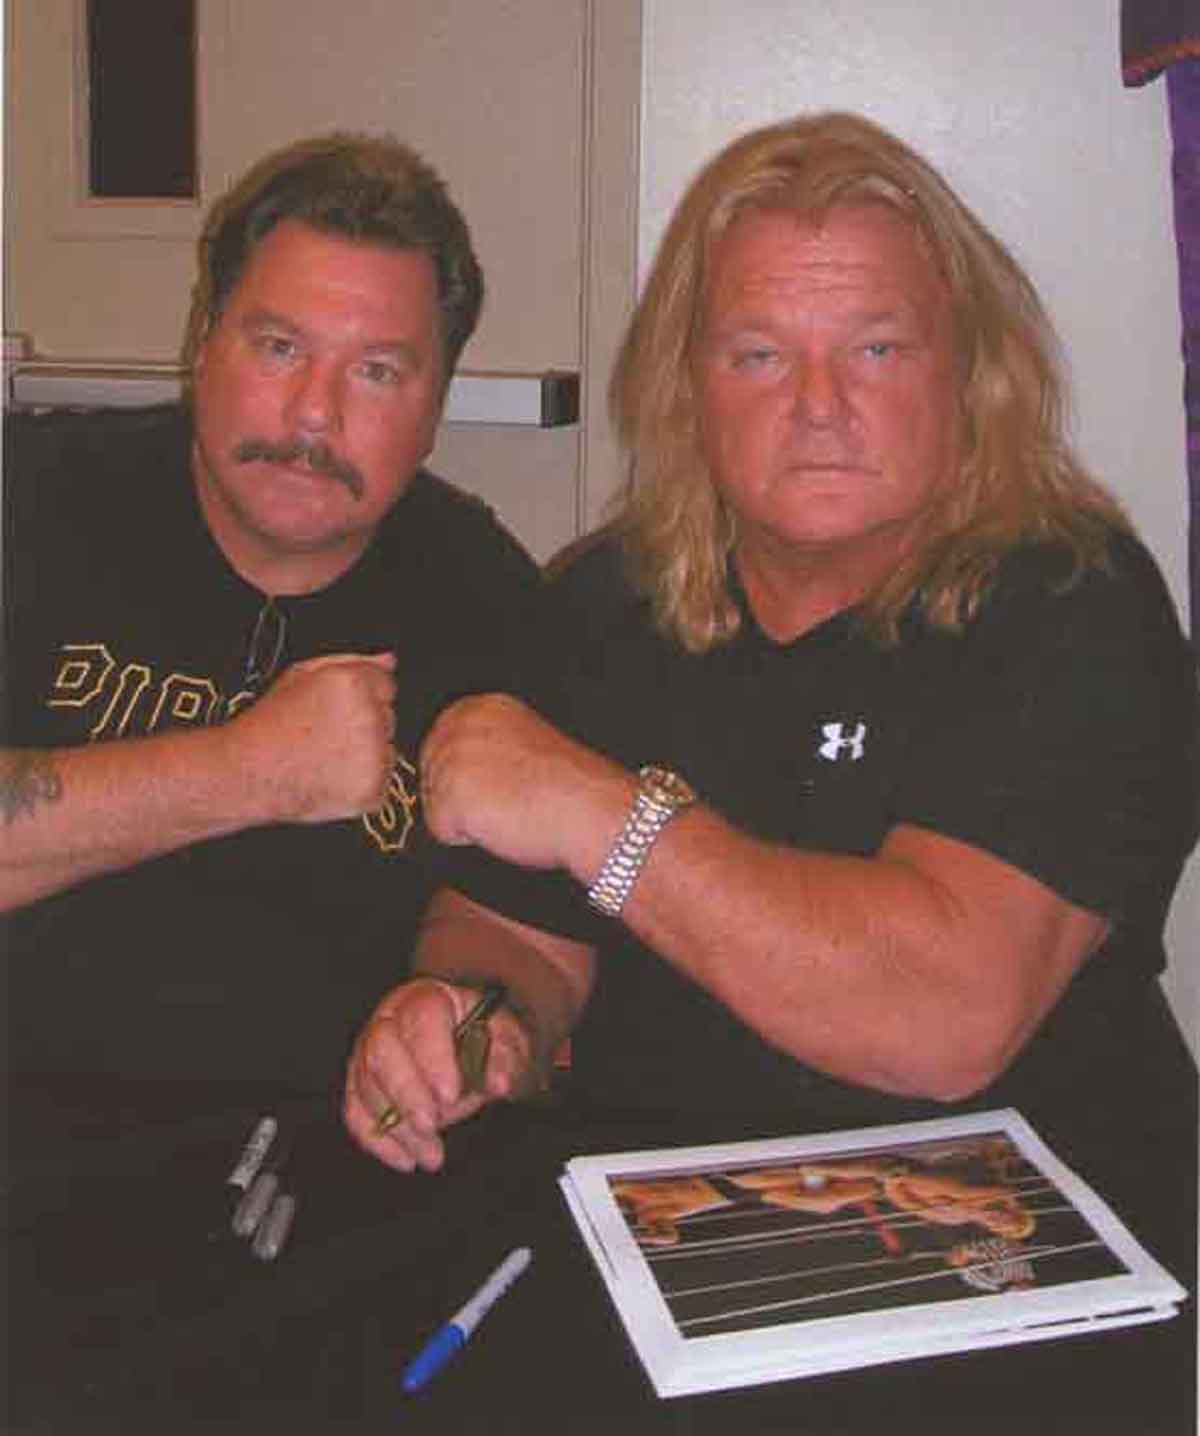 AM110 Bob Backlund Greg Valentine  Autographed Premiere Issue  Wrestling Magazine w/COA